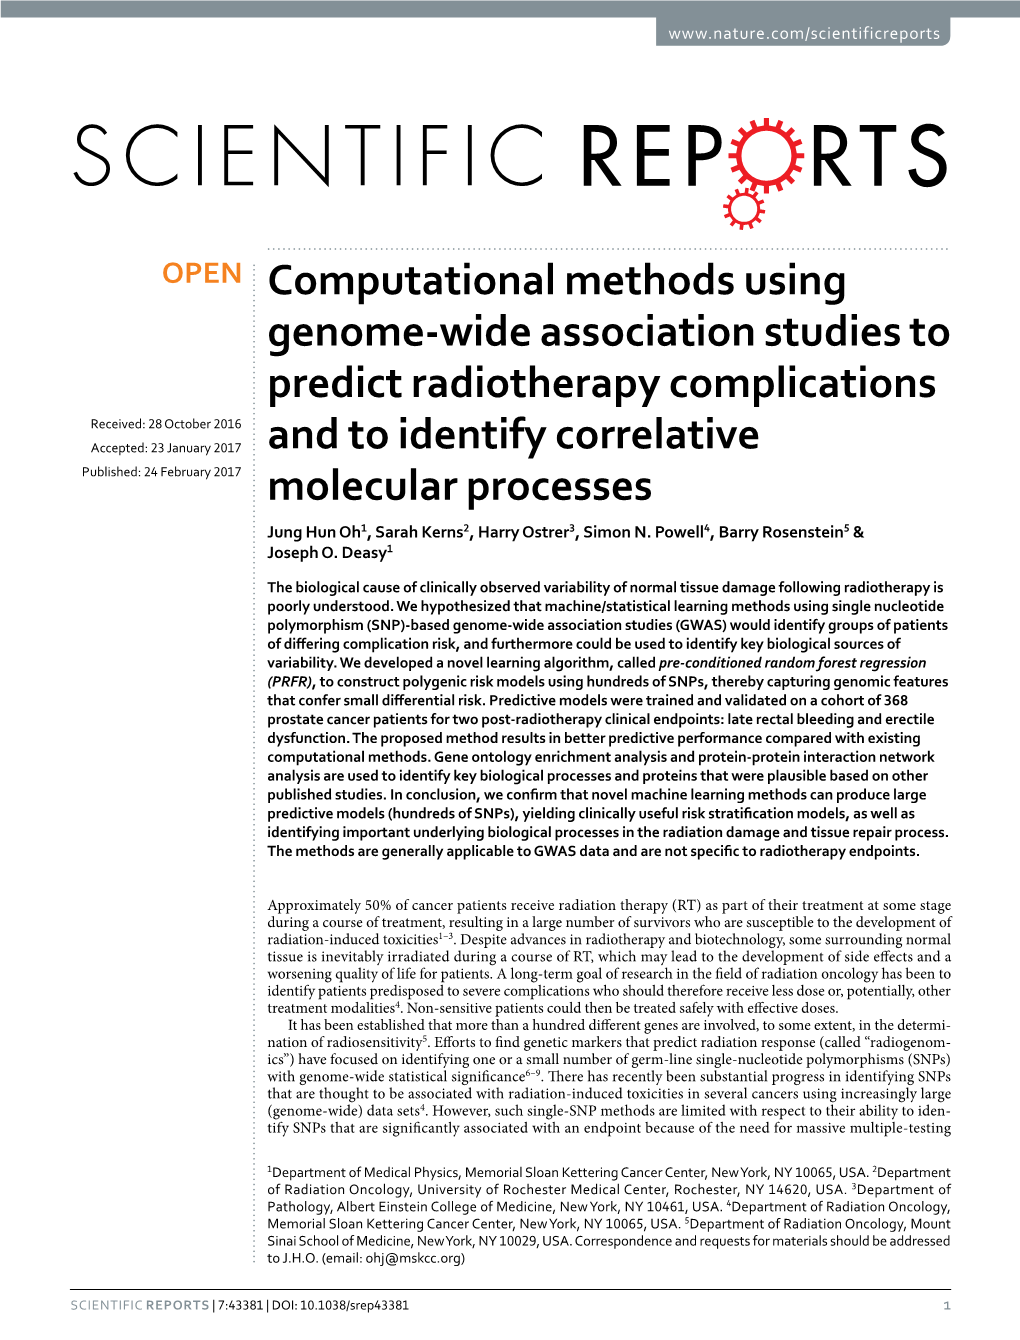 Computational Methods Using Genome-Wide Association Studies To